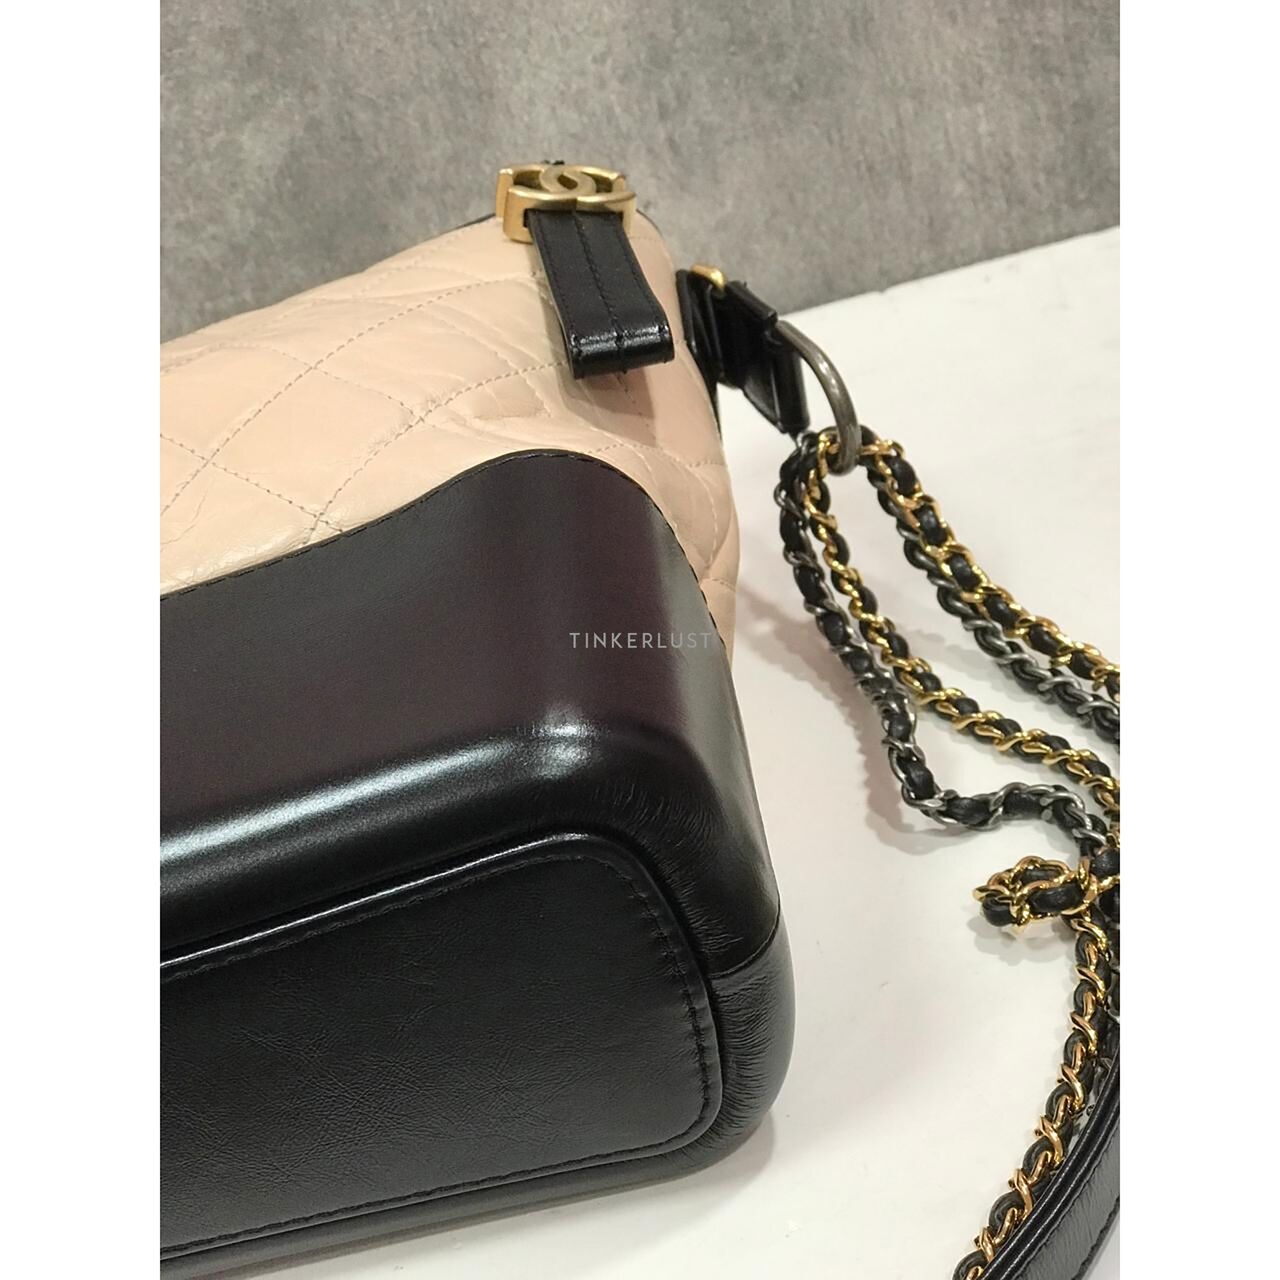 Chanel Gabrielle Medium Black & Beige # 27 Sling Bag